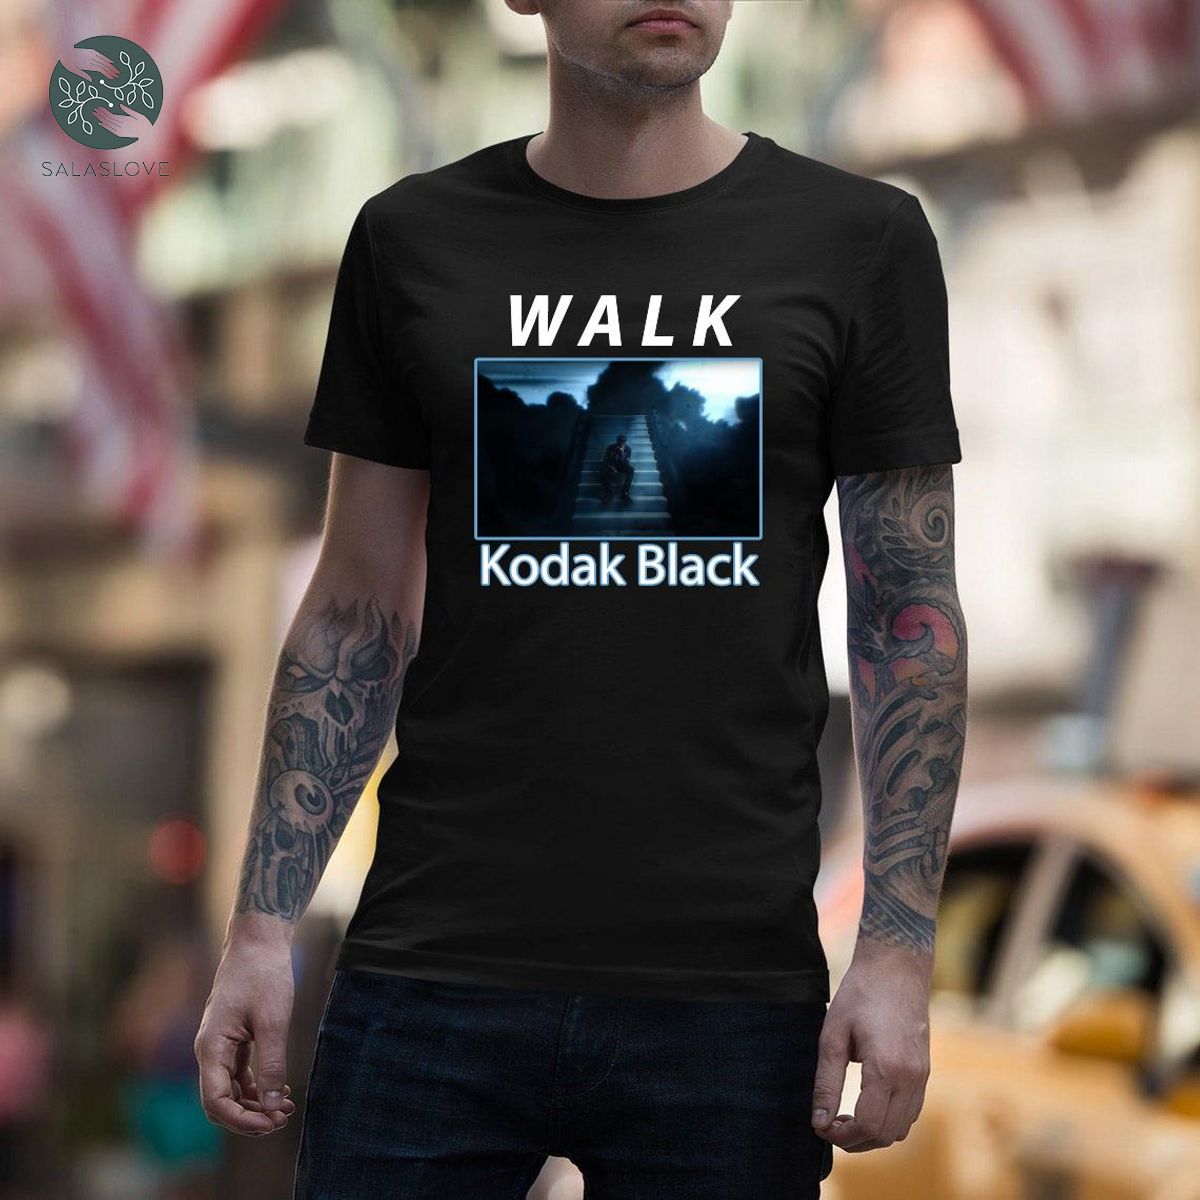 Kodak Black - Walk New Single Hoodie